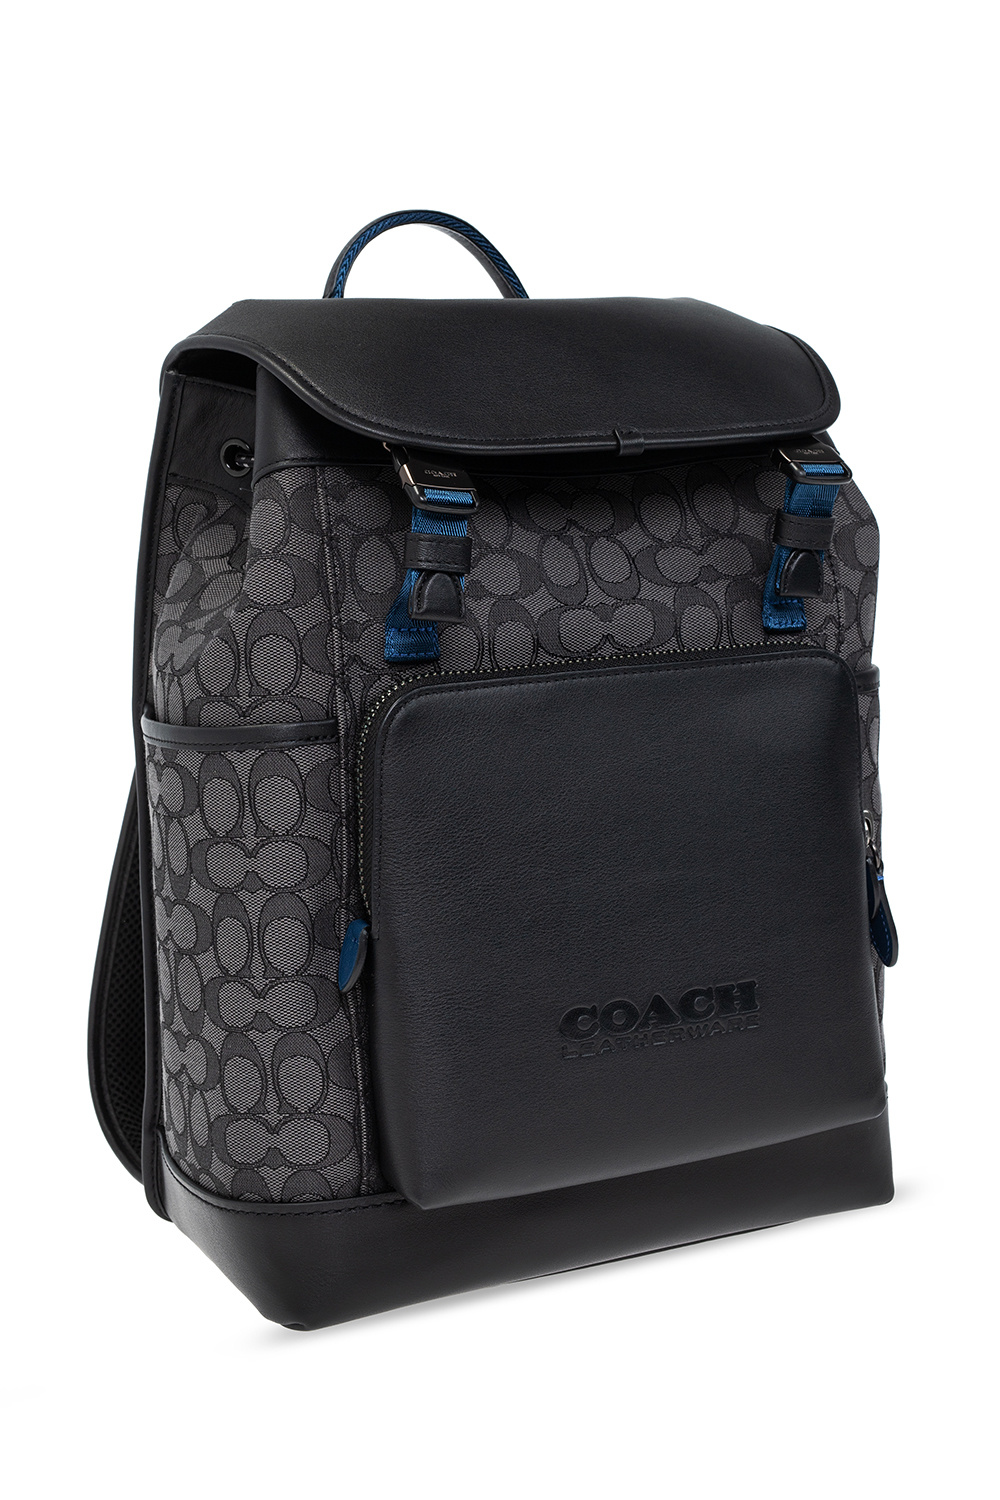 Coach ‘League’ backpack